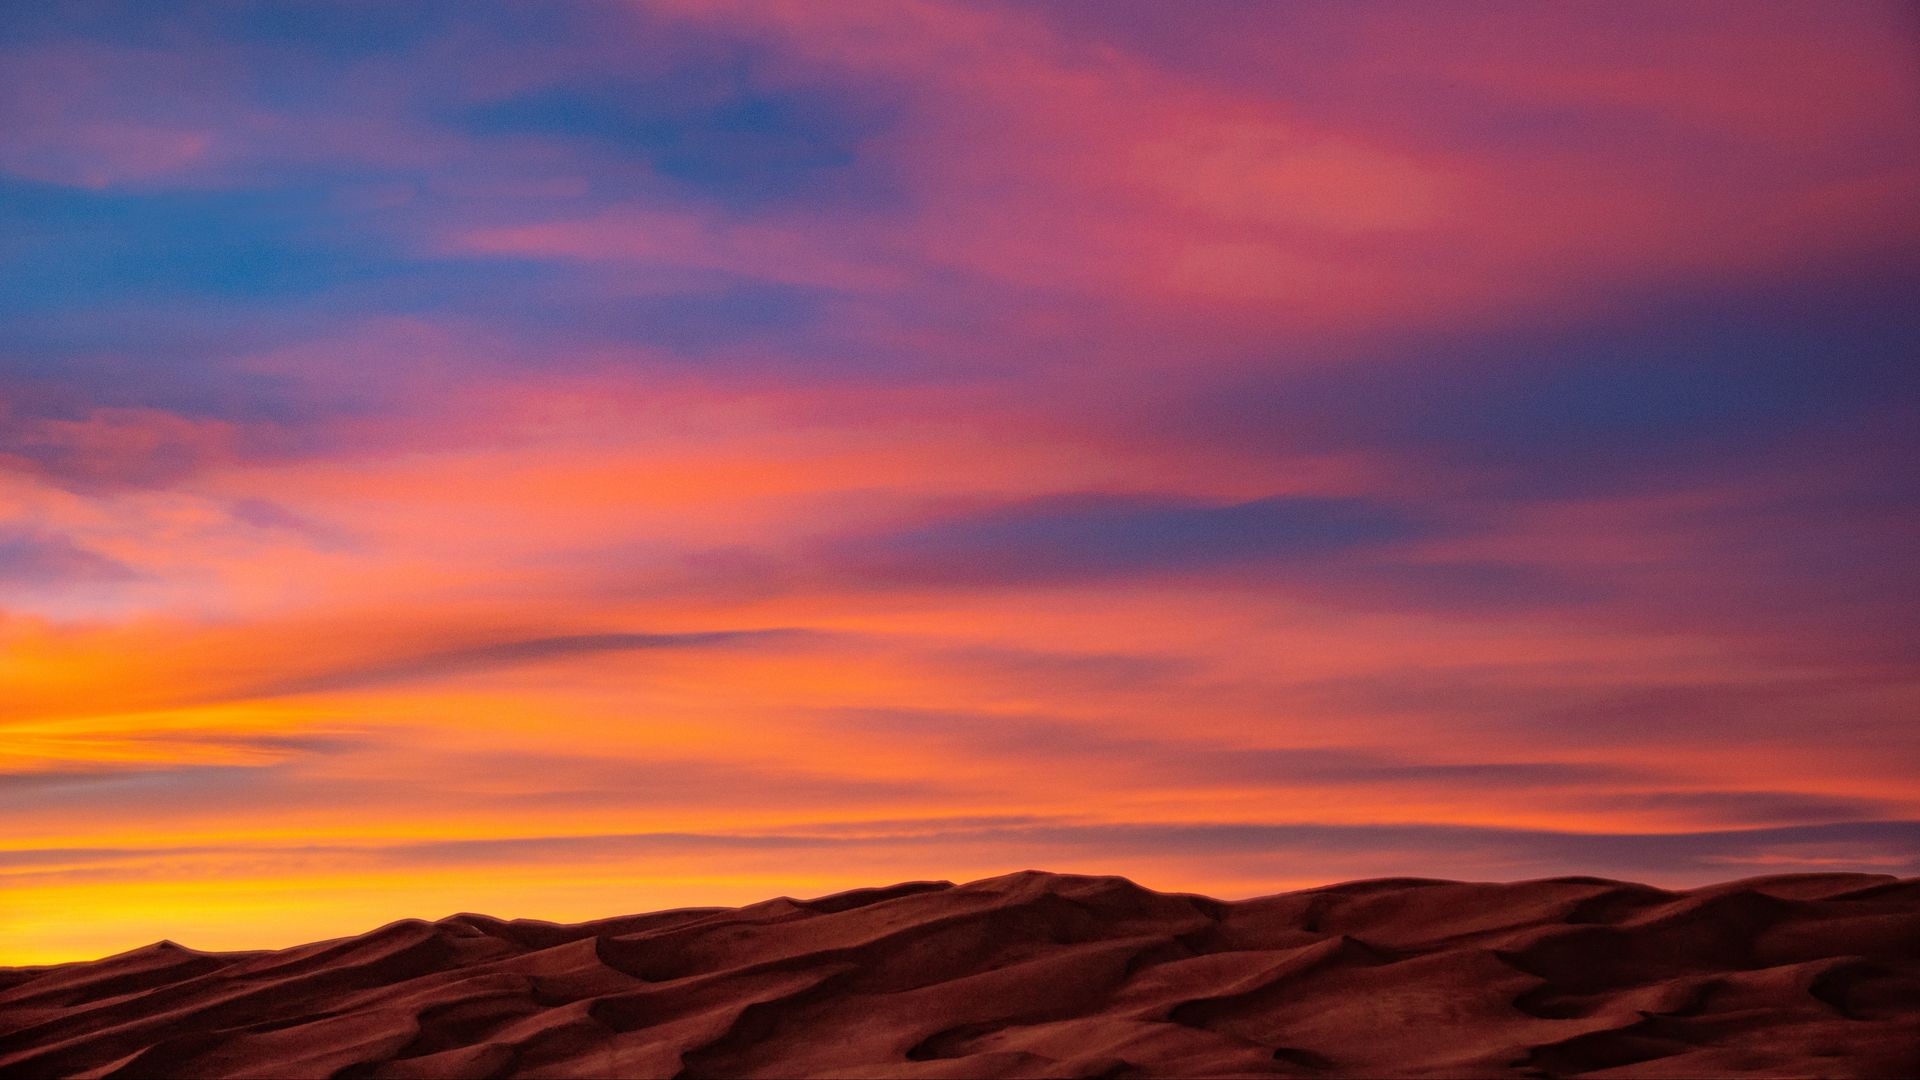 Download wallpaper 1920x1080 sand desert sunset sky full hd hdtv fhd  1080p hd background